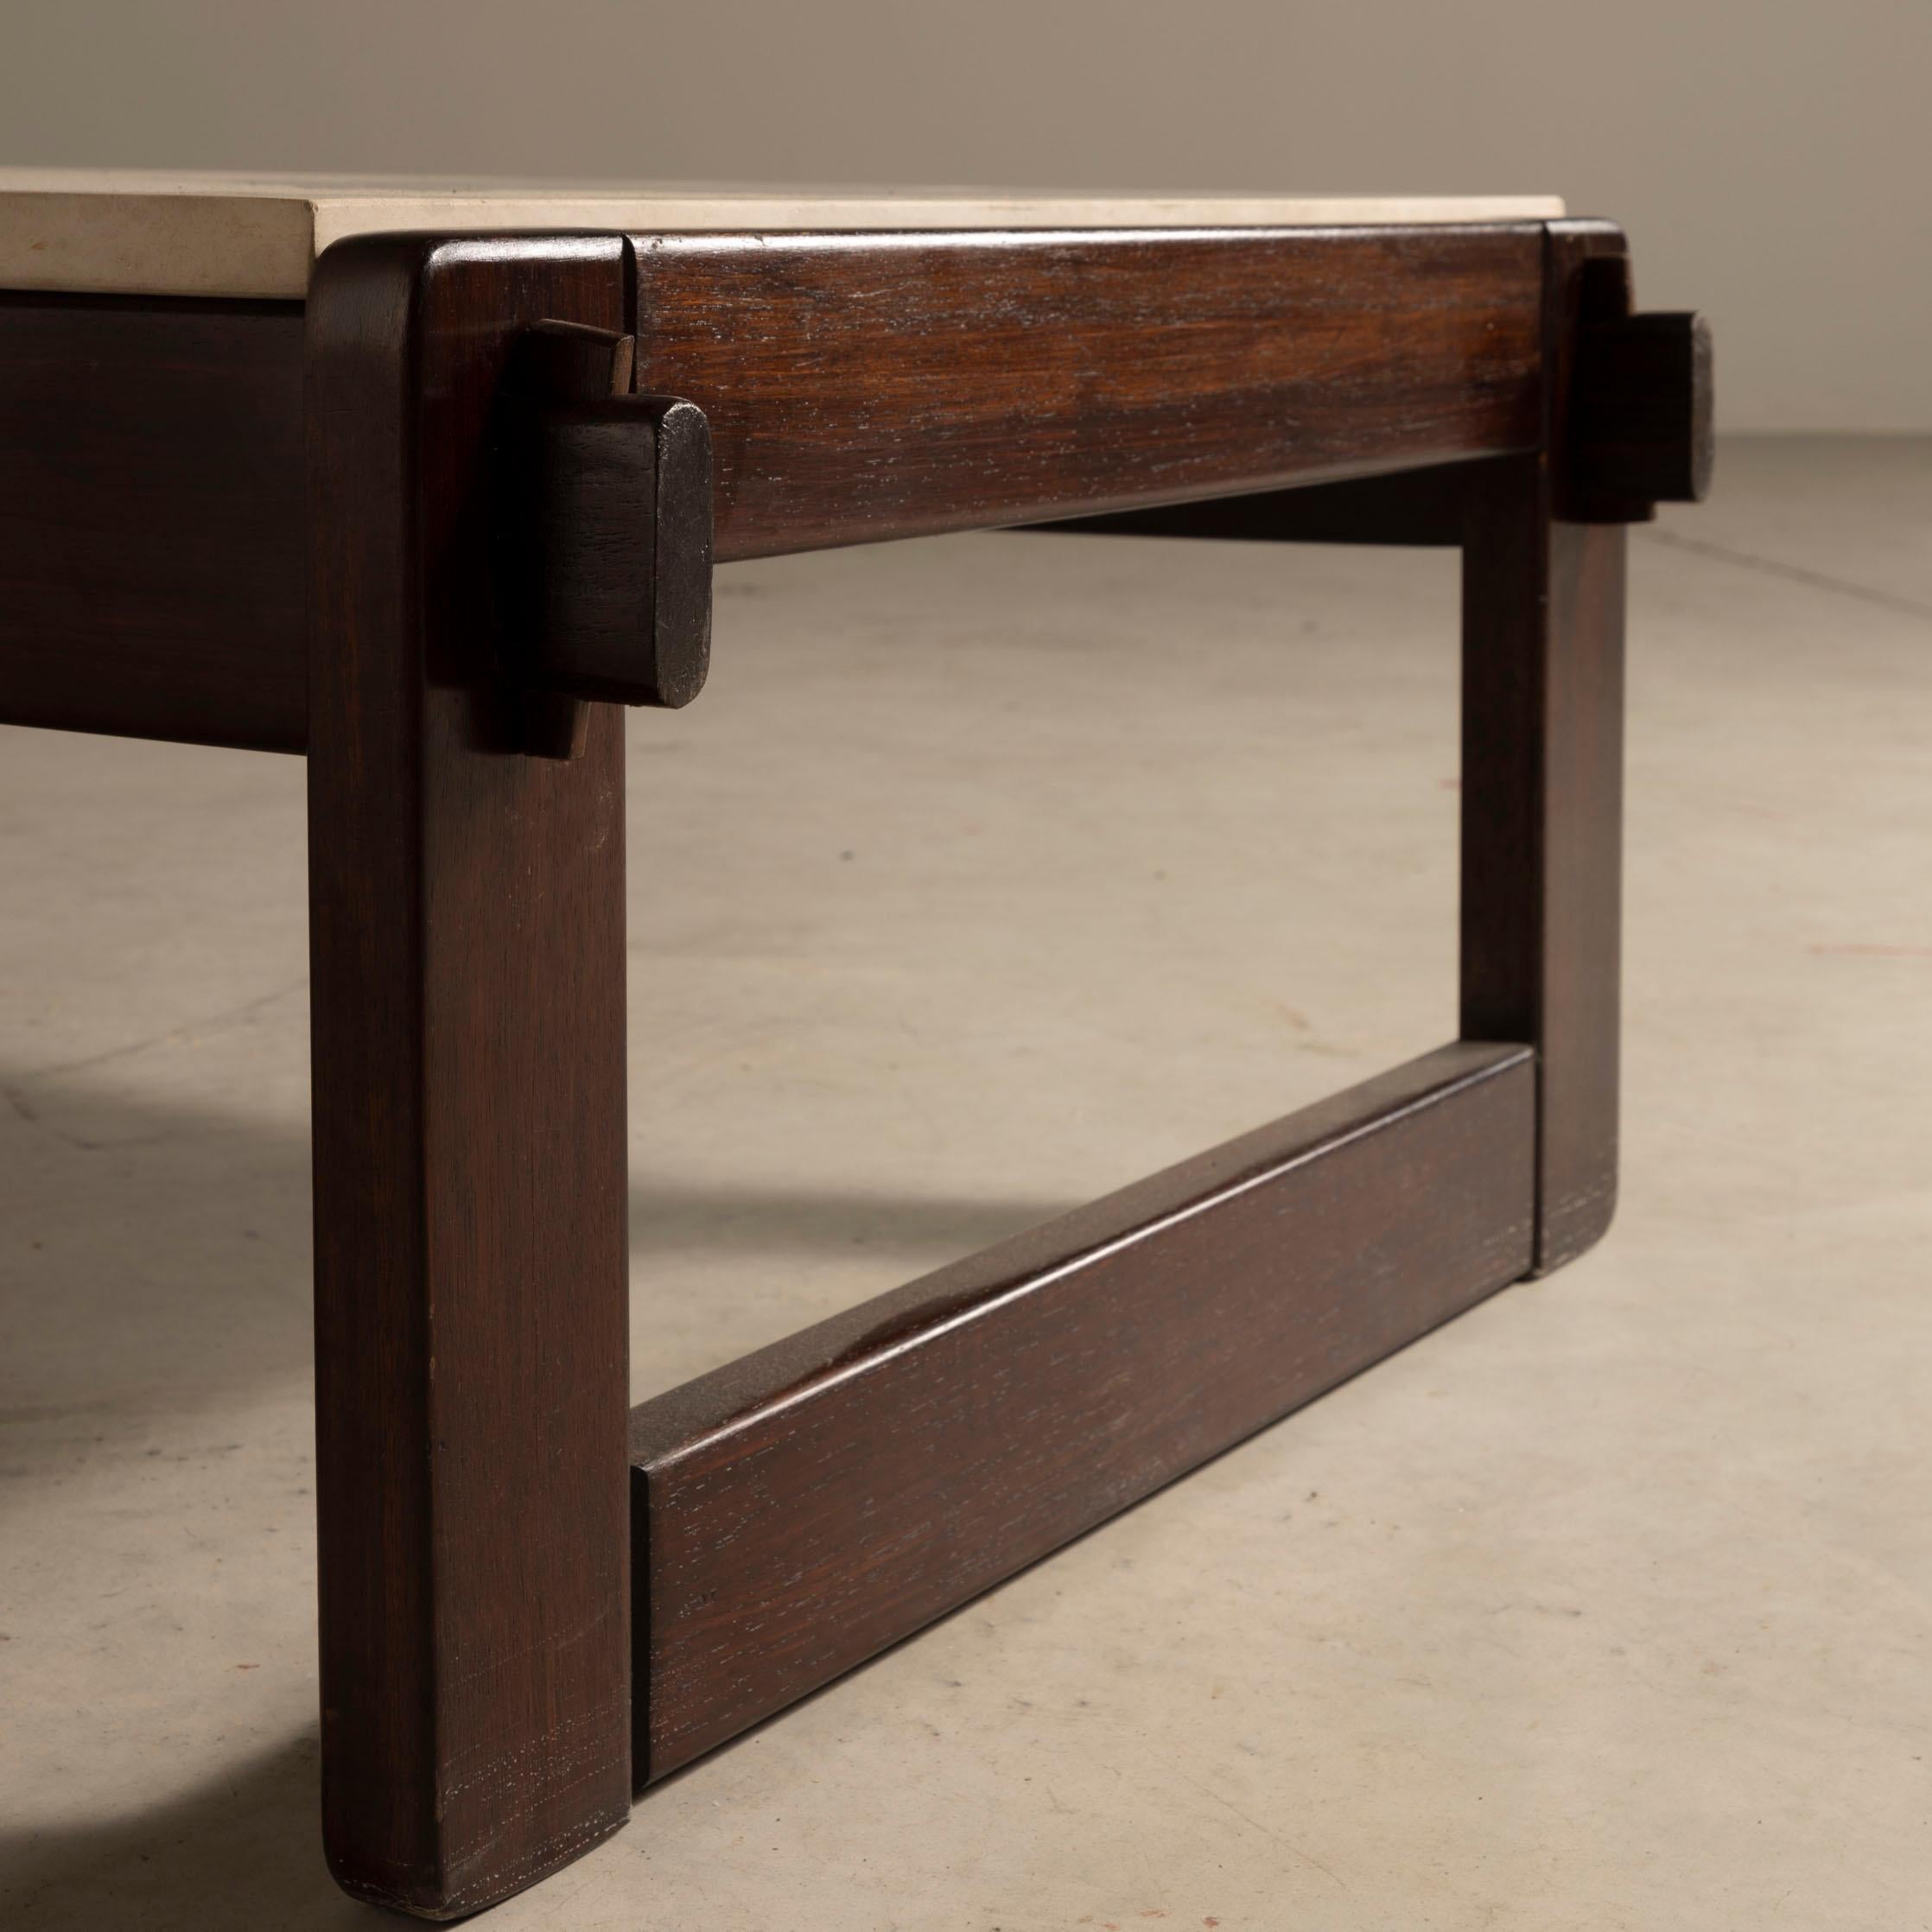 Limestone 'MP-79' Center Table, by Percival Lafer, Brazilian Mid-Century Modern Design For Sale